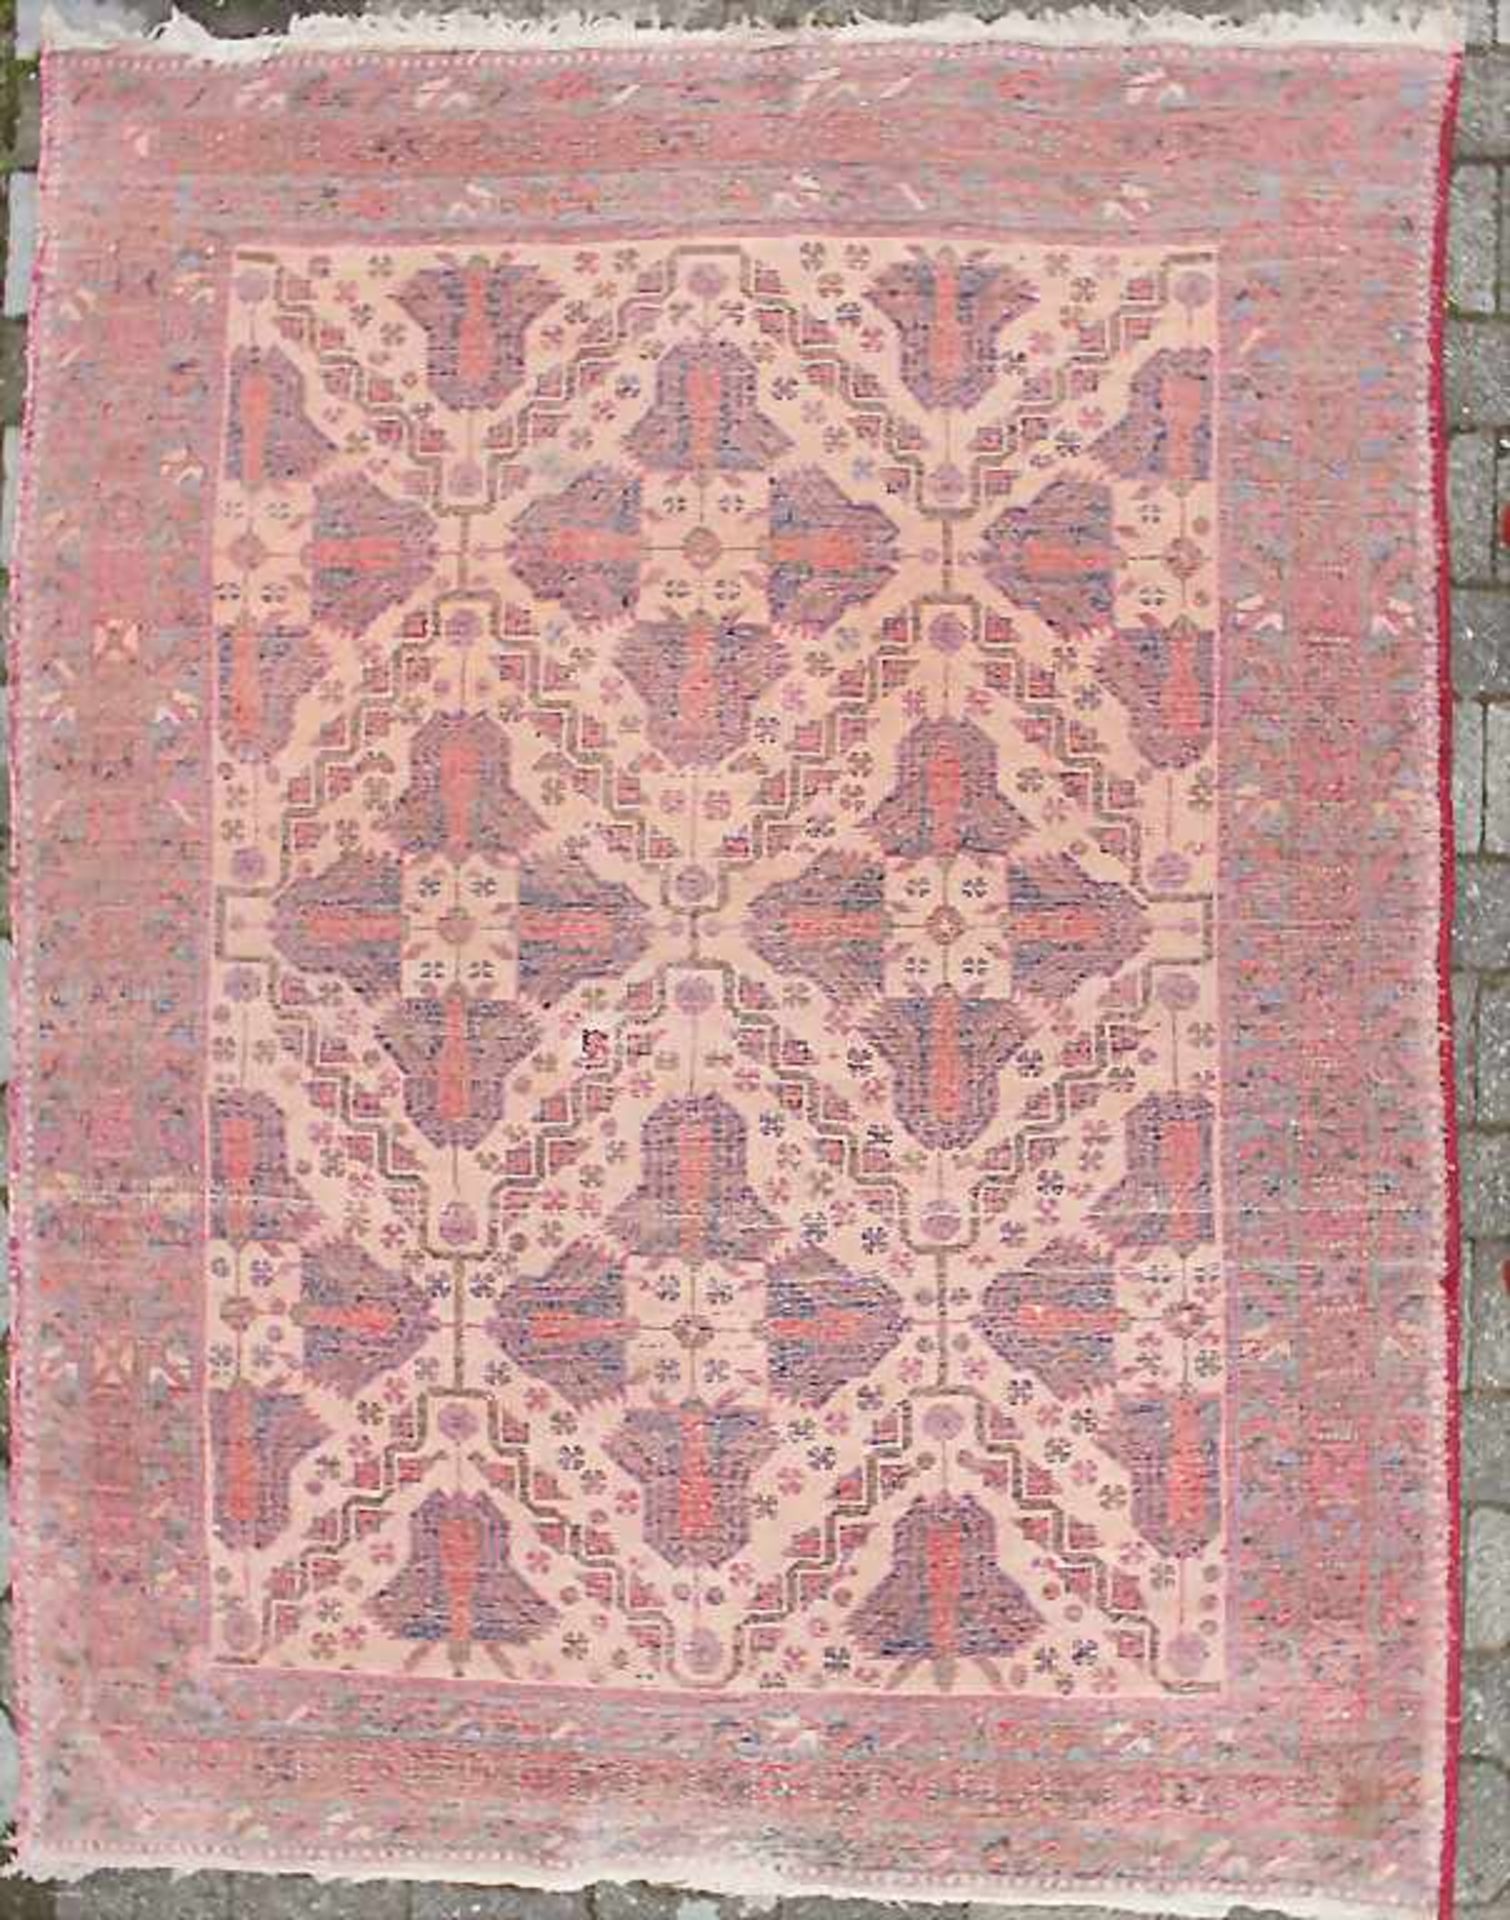 Teppich / A carpetMaterial: Wolle, Maße: 195 x 150 cm, Zustand: gut, partiell etwas betreten- - - - Bild 3 aus 4